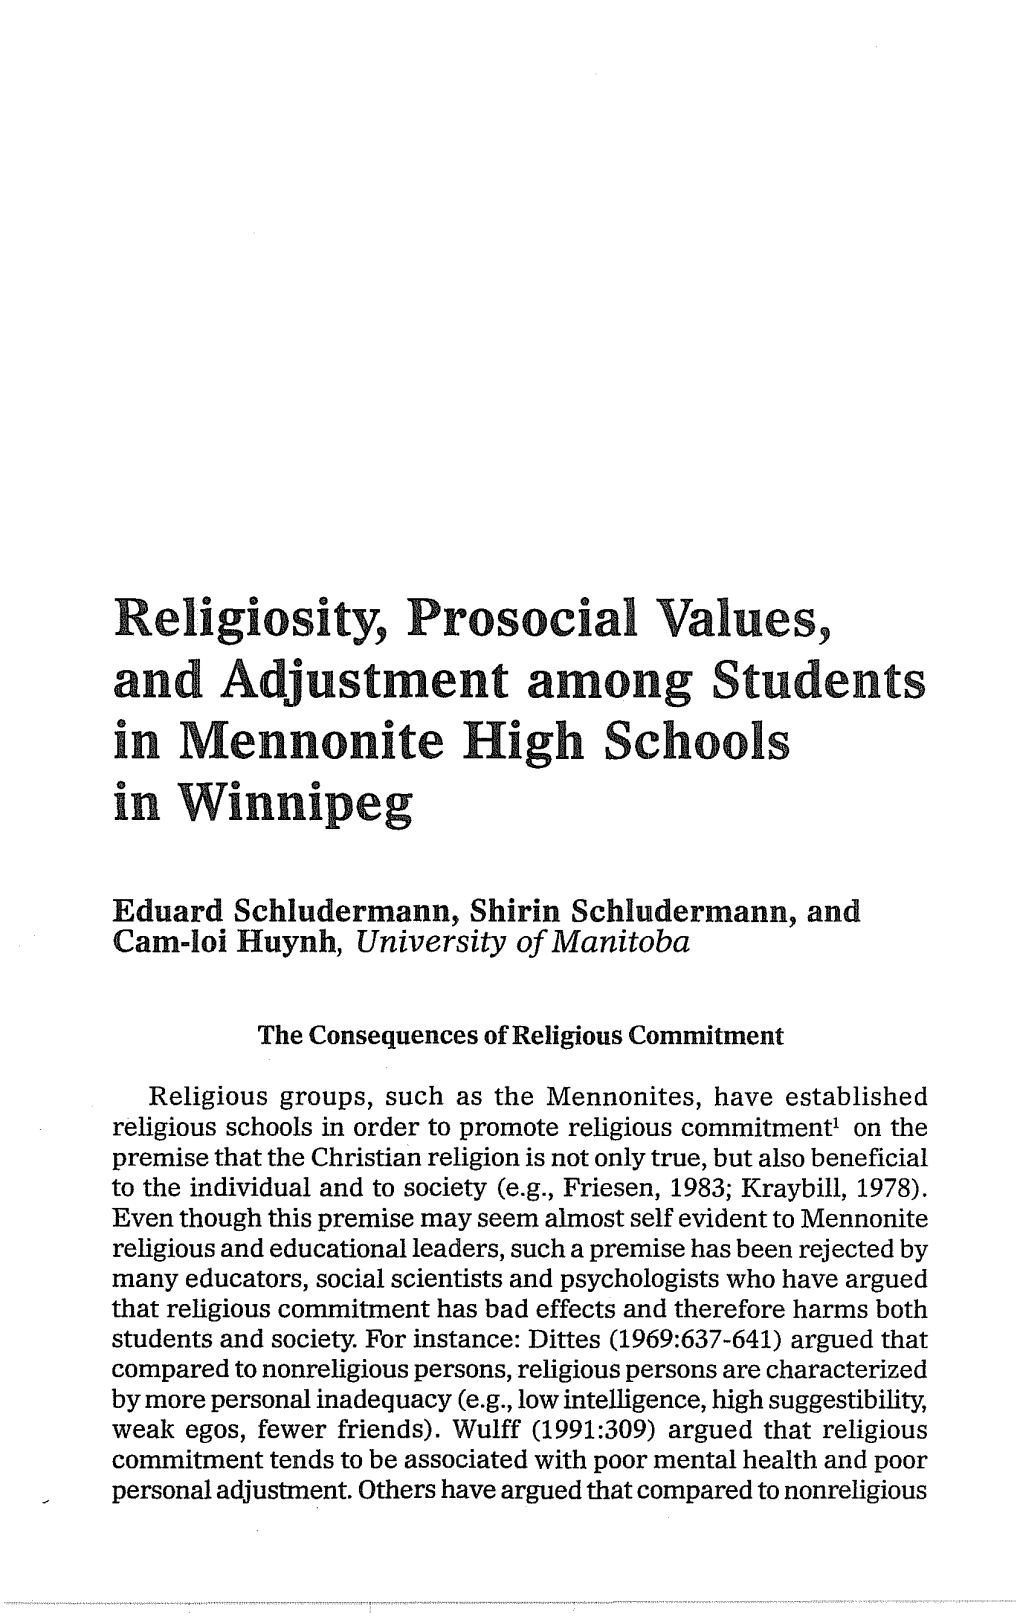 Religiosity, Prosocial Values, and Adjustment Among Students in Mennonite High Schools in Winnipeg